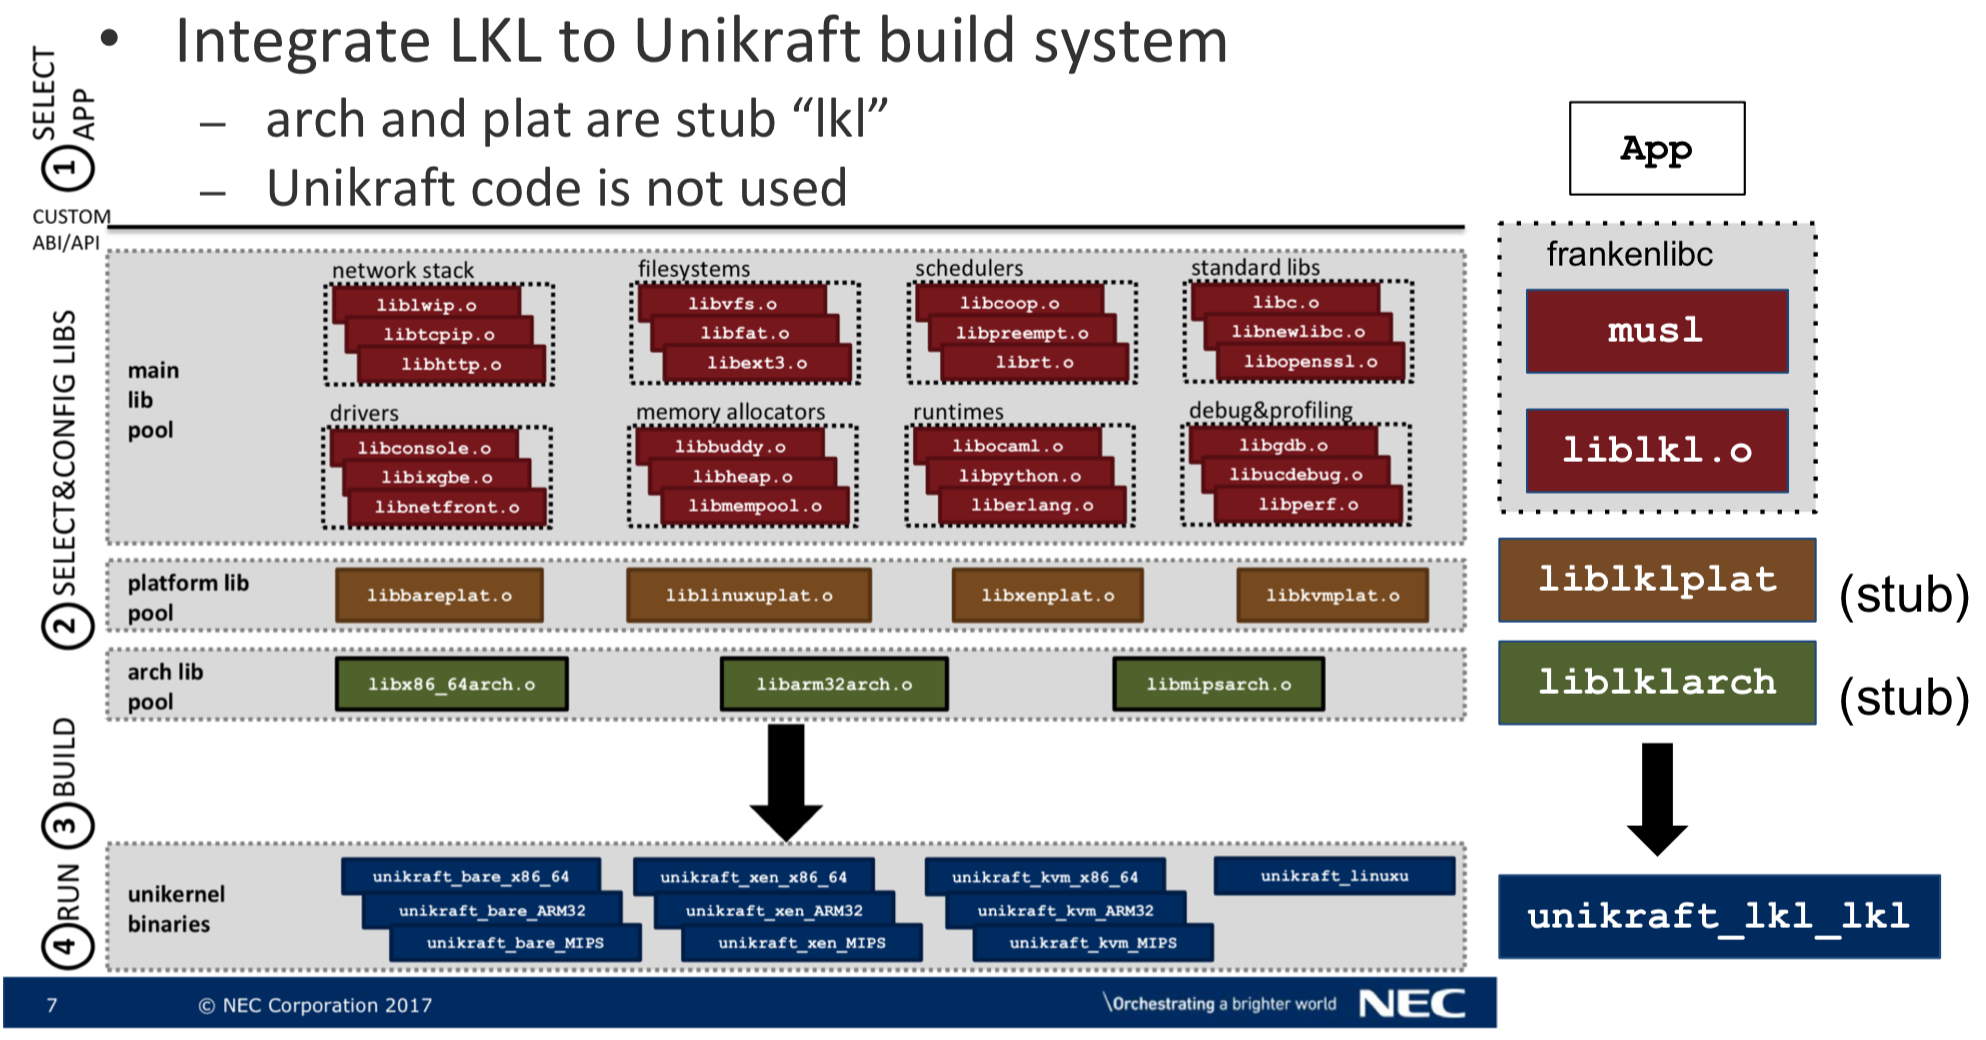 The architecture of LKL on Unikraft v1